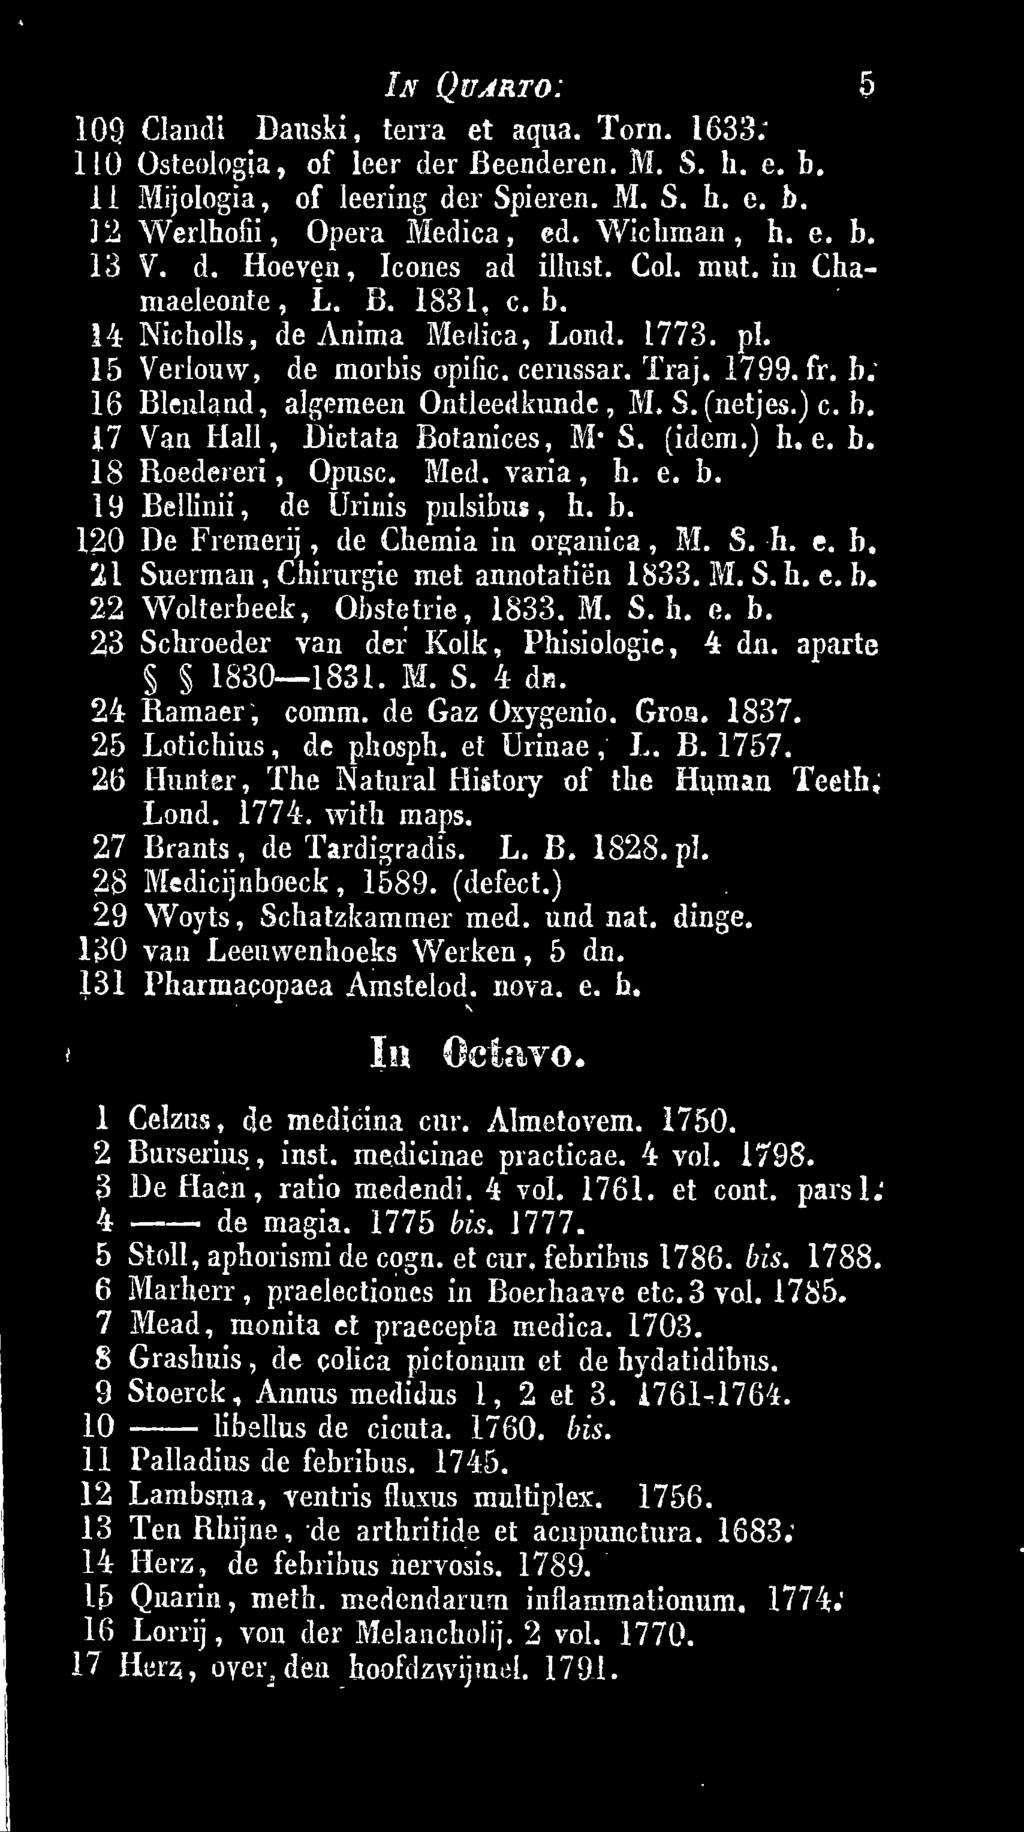 24 Ramaer, comm. de Gaz Oxygenio. Groa. 1837. 25 Lotichius, de phosph. et Urinae, L. B. 1757. 26 Hunter, The Natural History of tlie Human Teeth, Lond. 1774. with maps. 27 Brants, de Tardigradis. L. B. 1828.